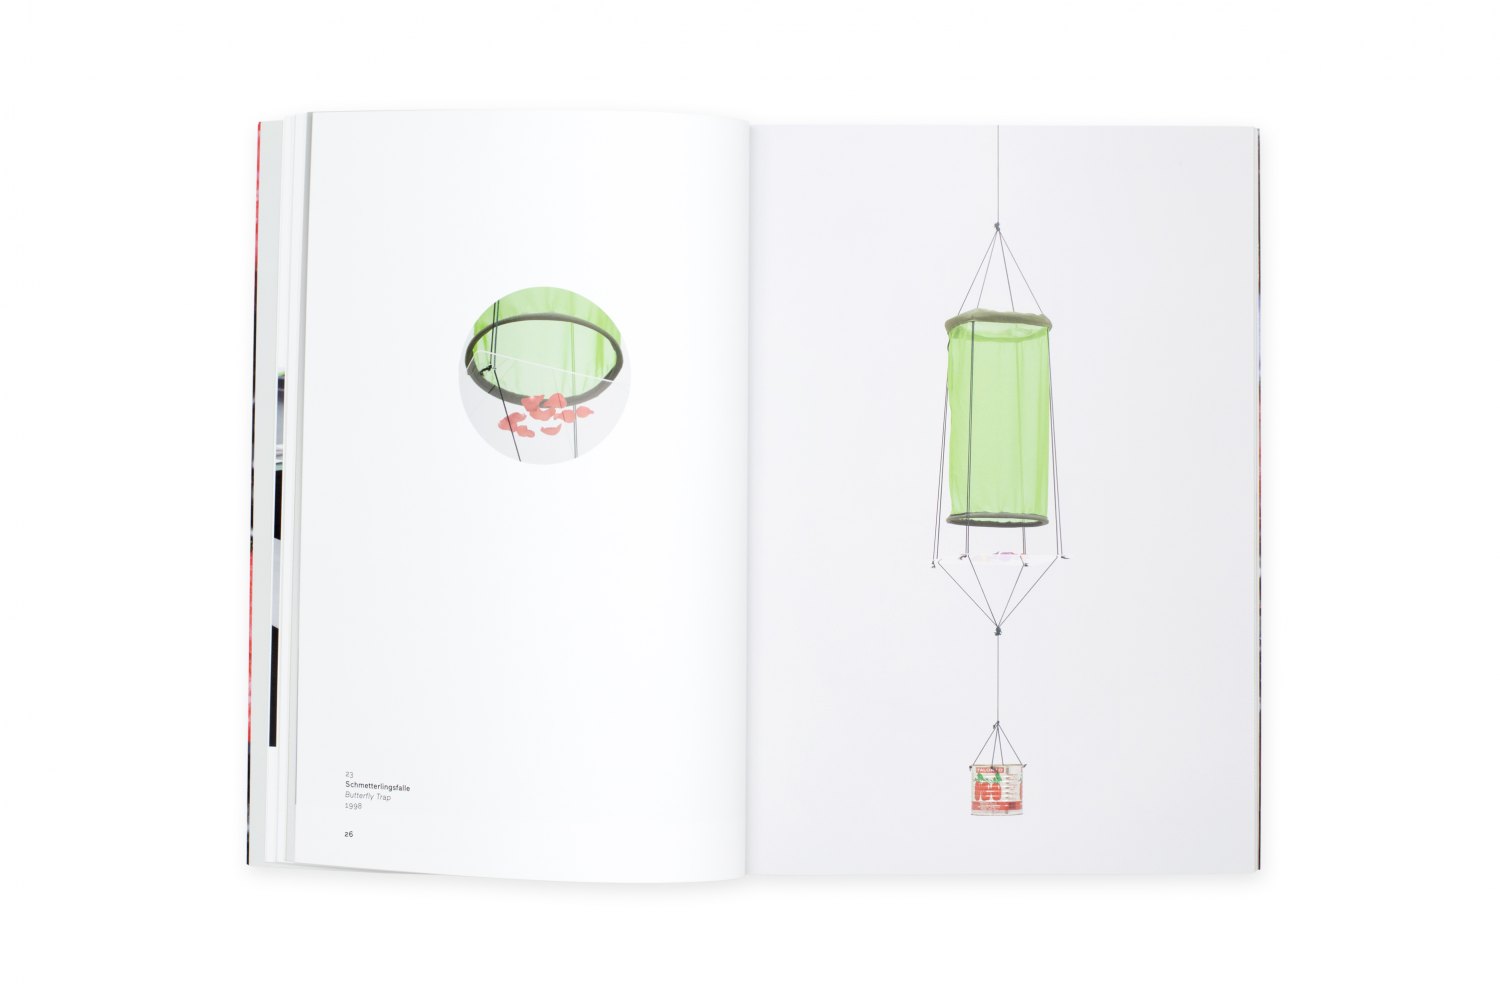 Andreas Slominski, Sammlung Holtfrerich Catalogue, Kunsthalle, Bremen 2014, 136 p.  ISBN 978-3-89770-443-5